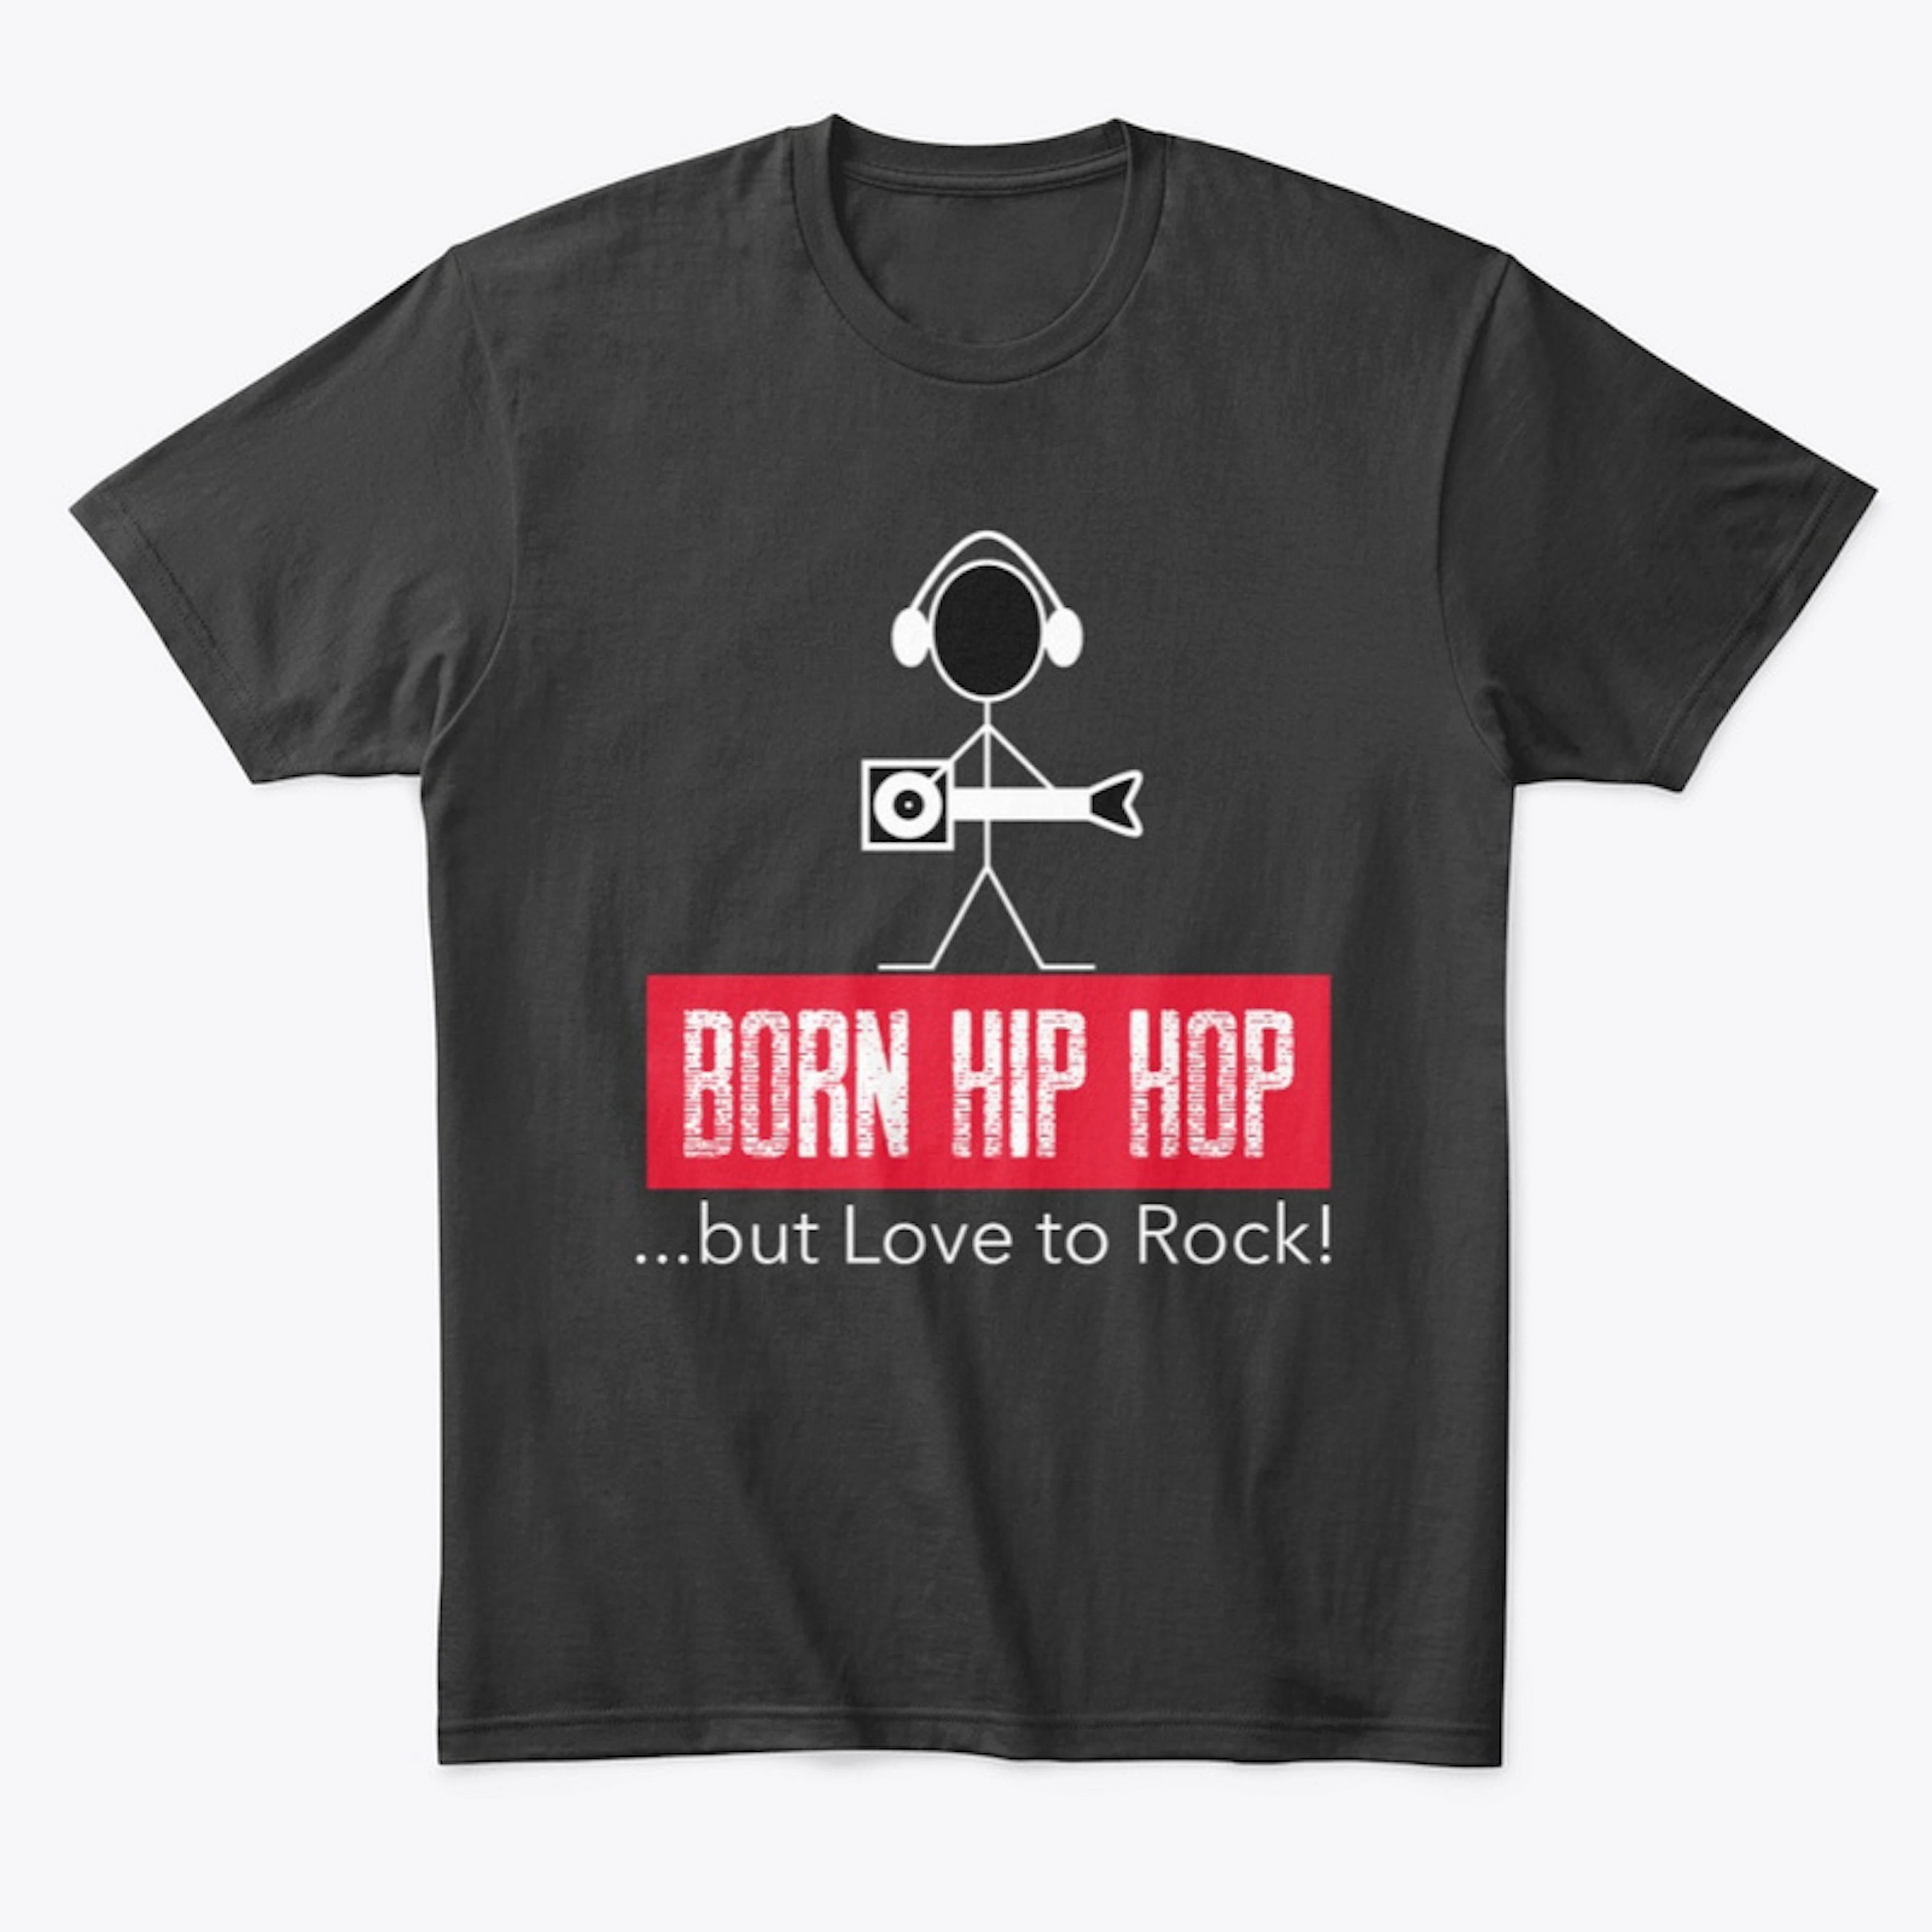 Born Hip Hop but Love to Rock!